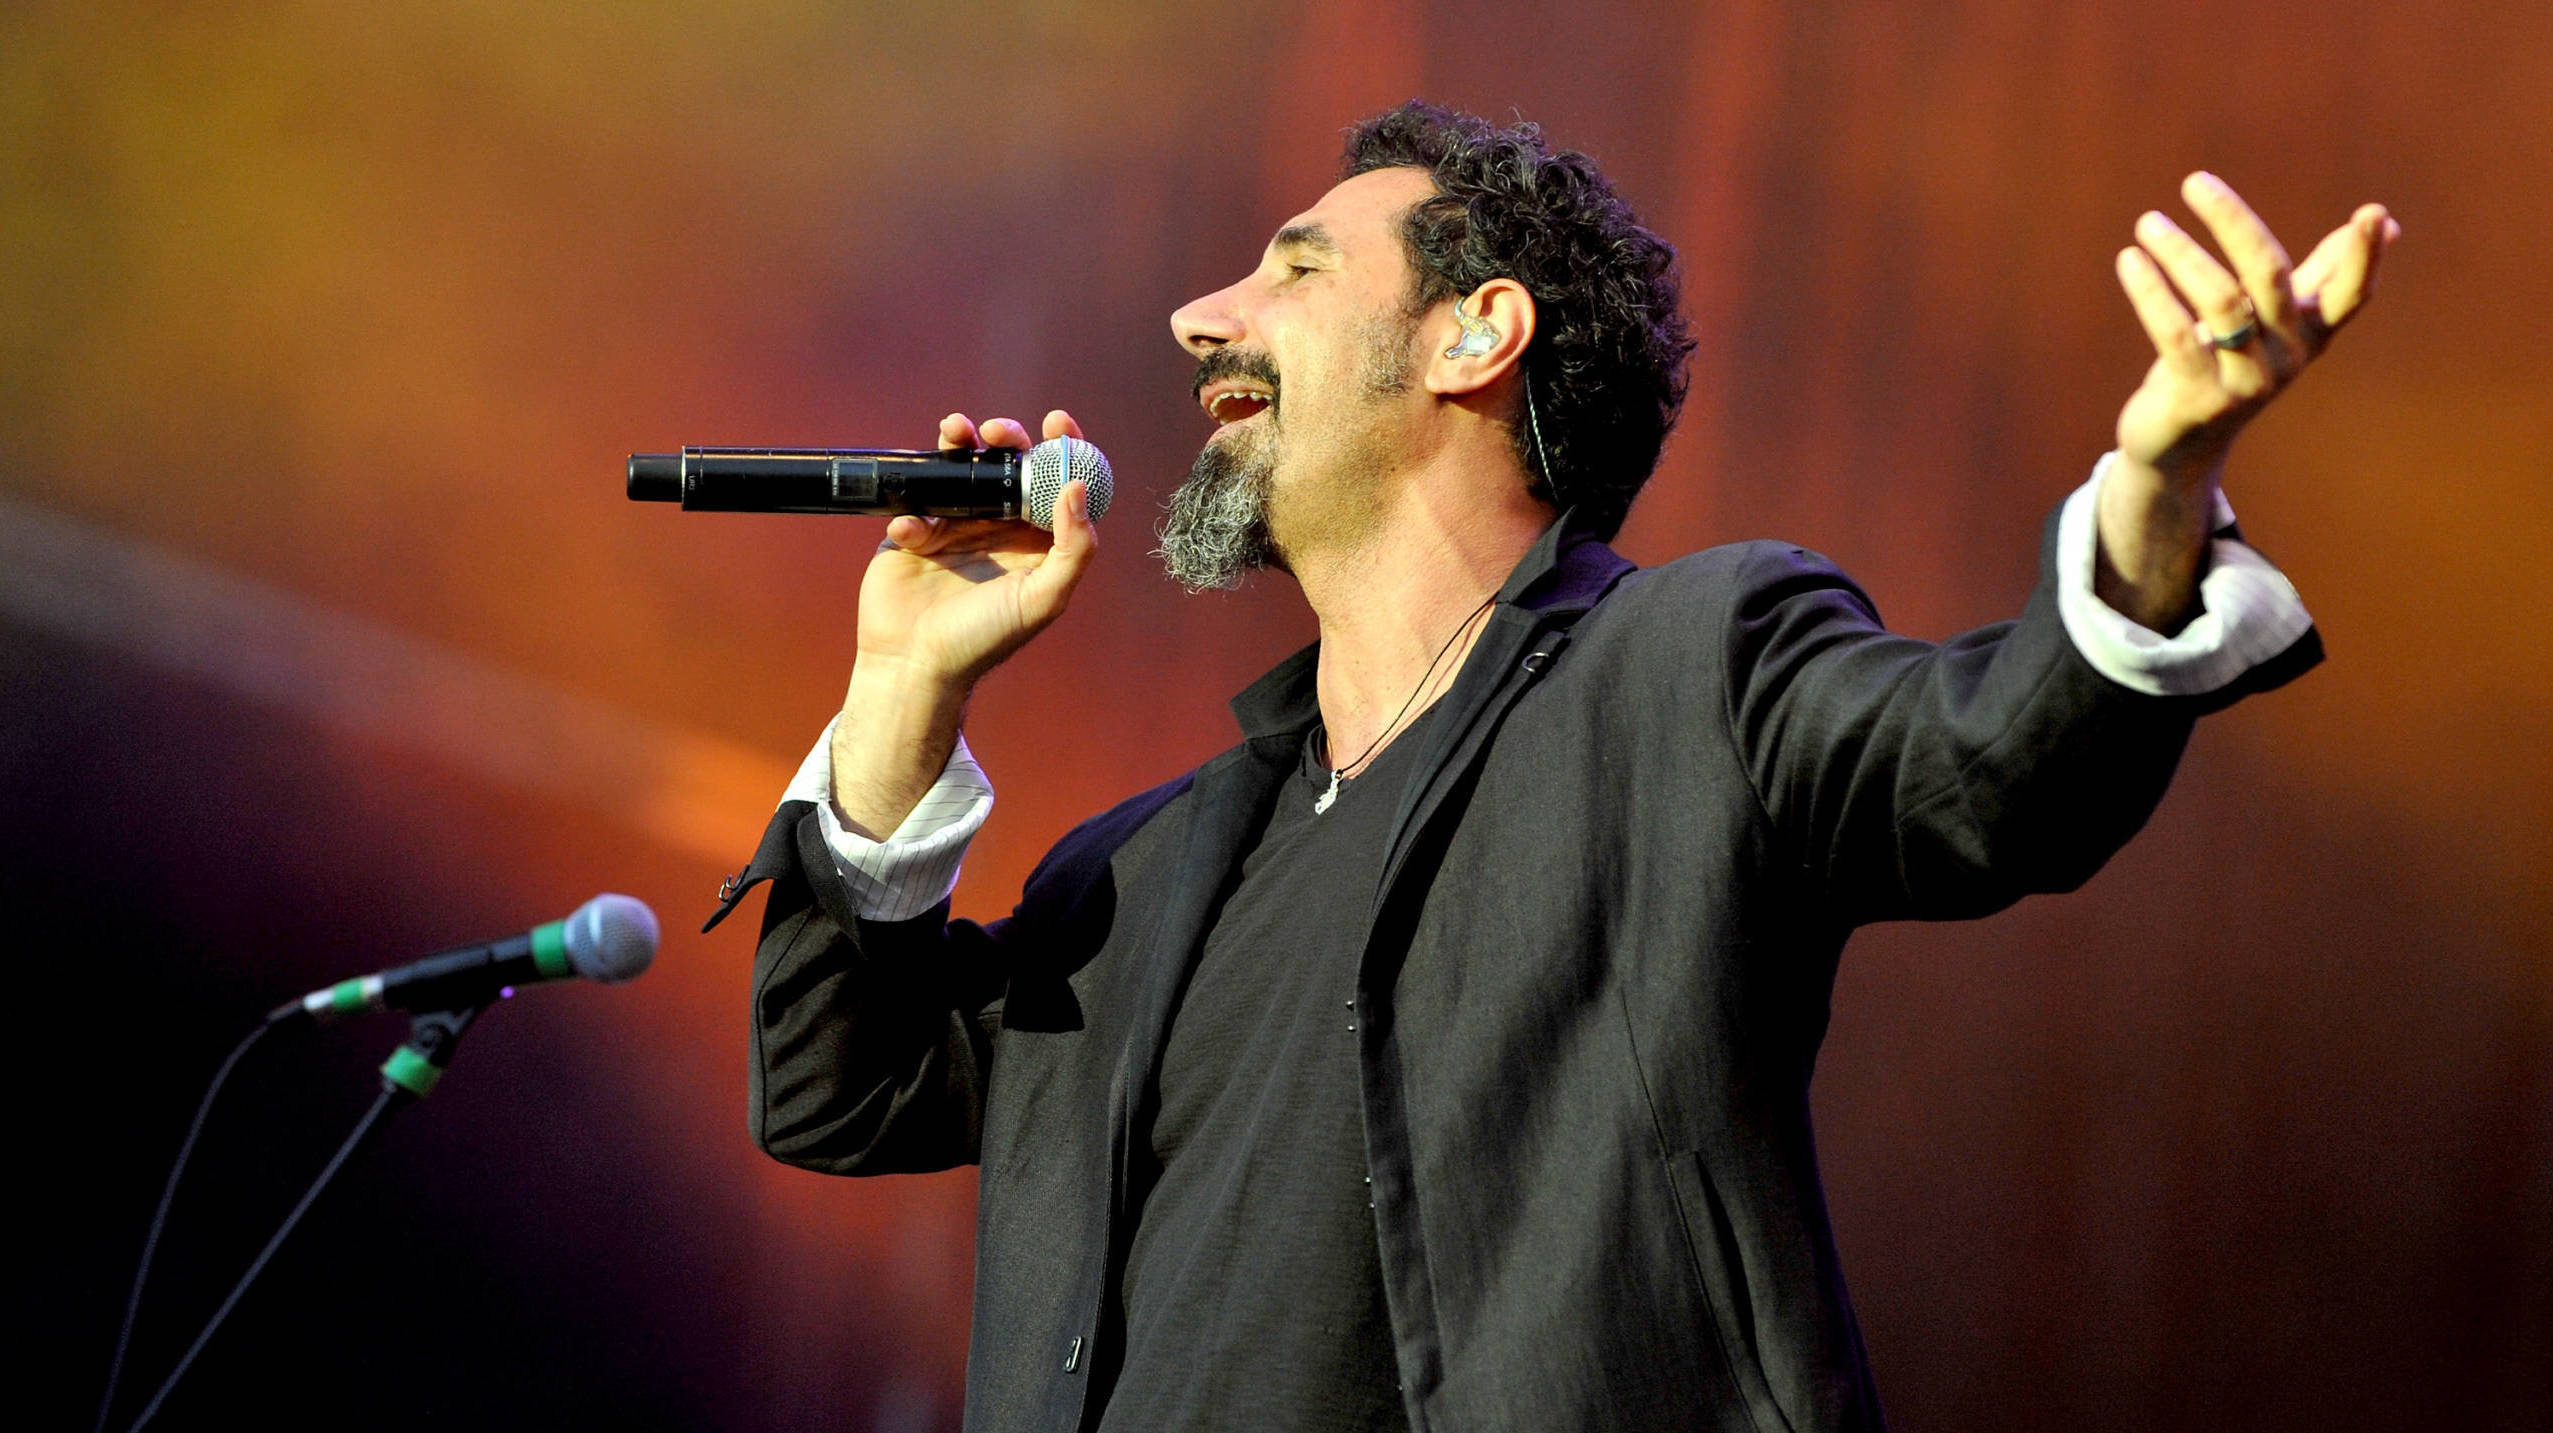 System of a Down: Serj Tankian, Regarded as one of the best vocalists in heavy metal. 2560x1440 HD Wallpaper.